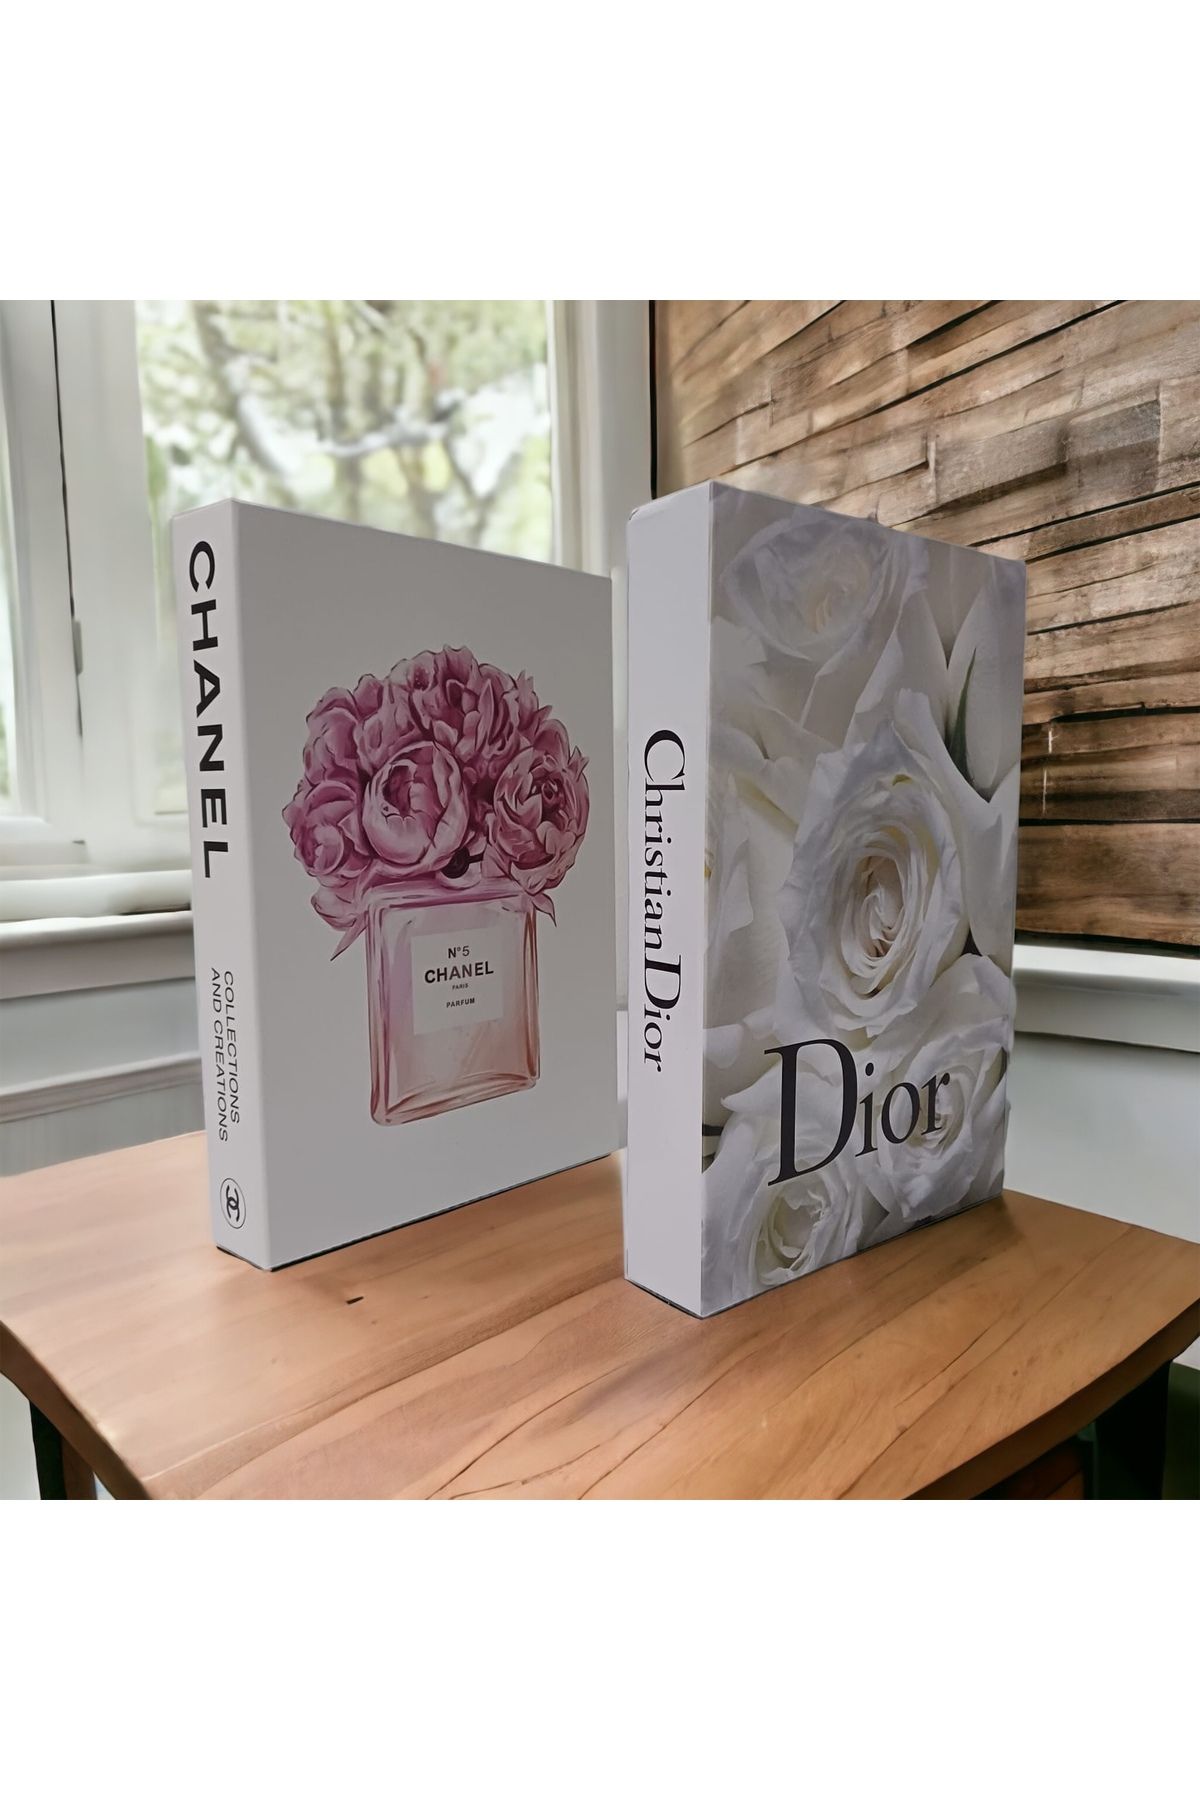 NARİBA Christian Dior & Chanel 2li dekoratif kutu set Kitap Kutu Set